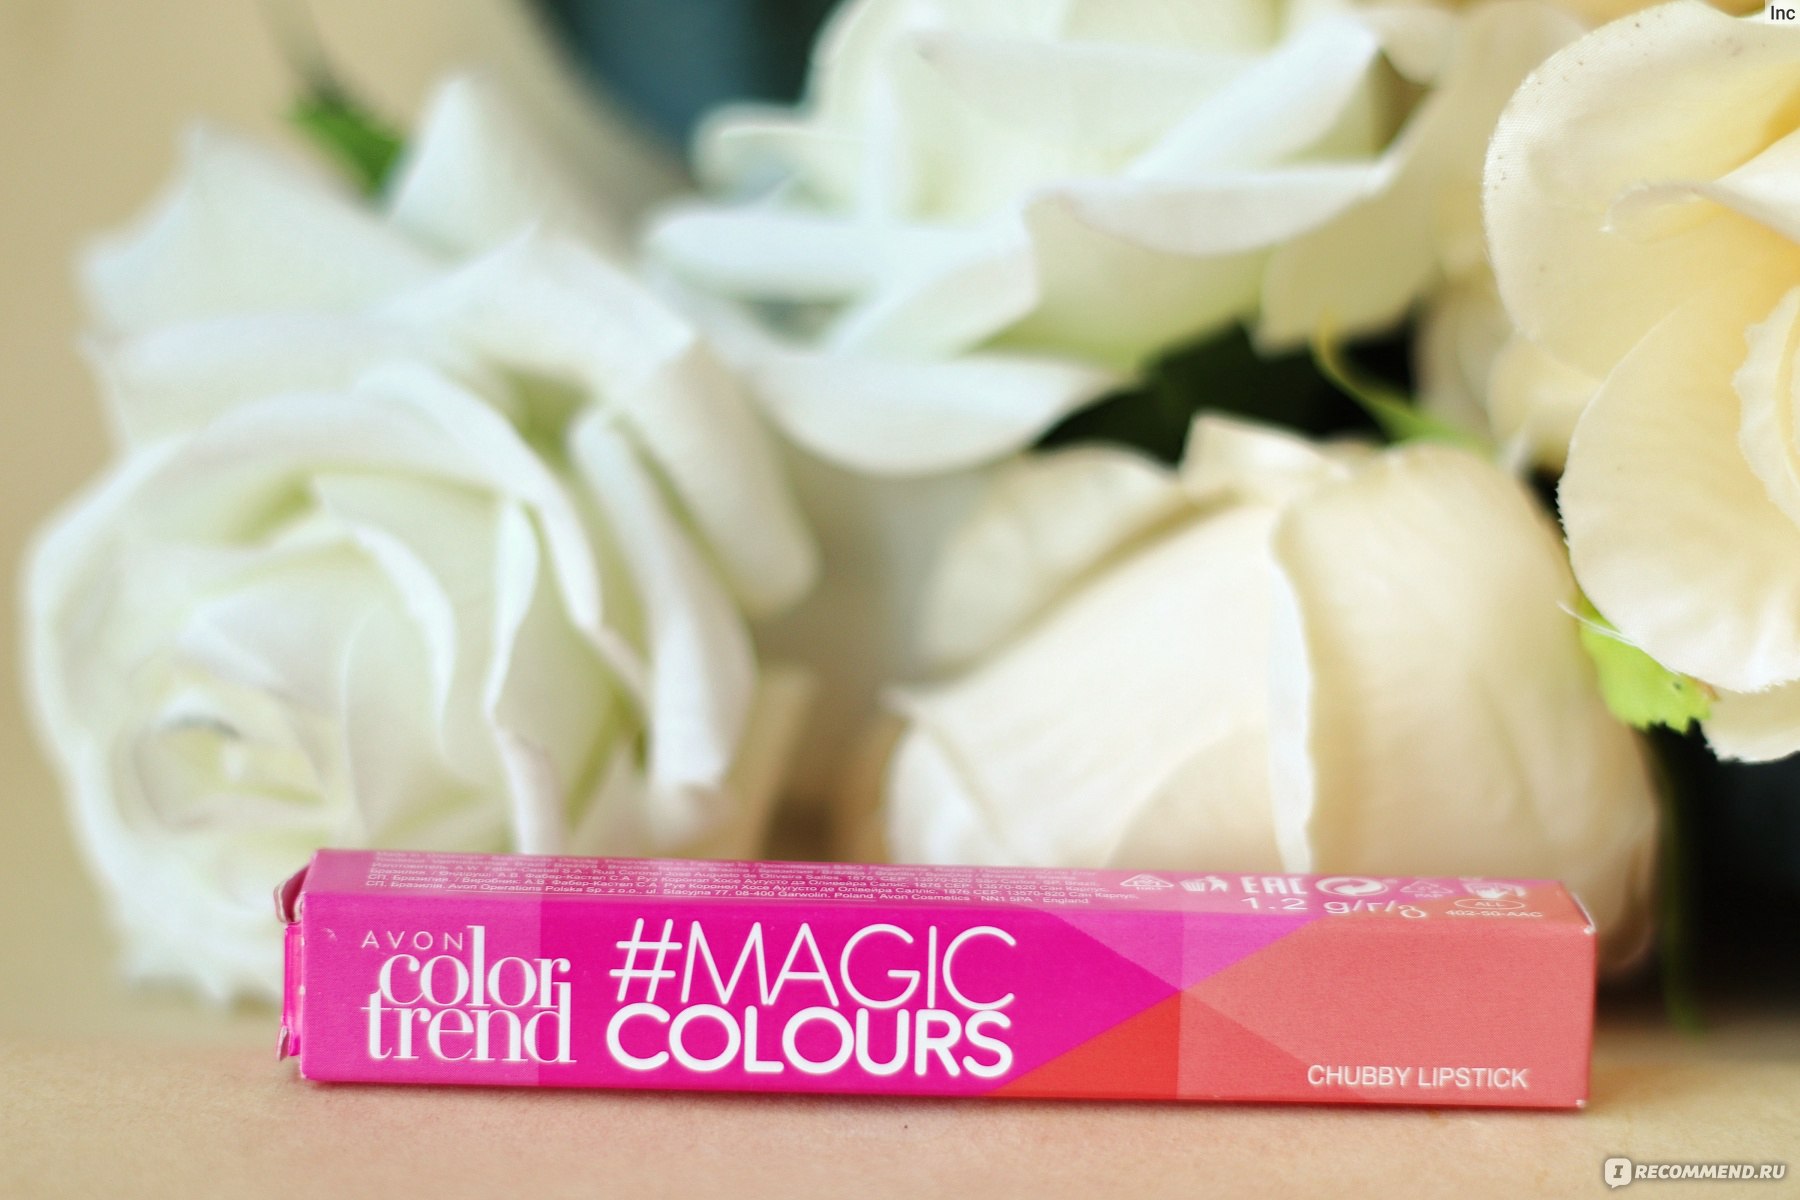 Avon trend. Color trend Avon #Magic Colours. Эйвон колор тренд Магик карандаш для губ. Avon COLORTREND Nail Frosting Silver. Avon Color trend d'Licious тинт отзывы.